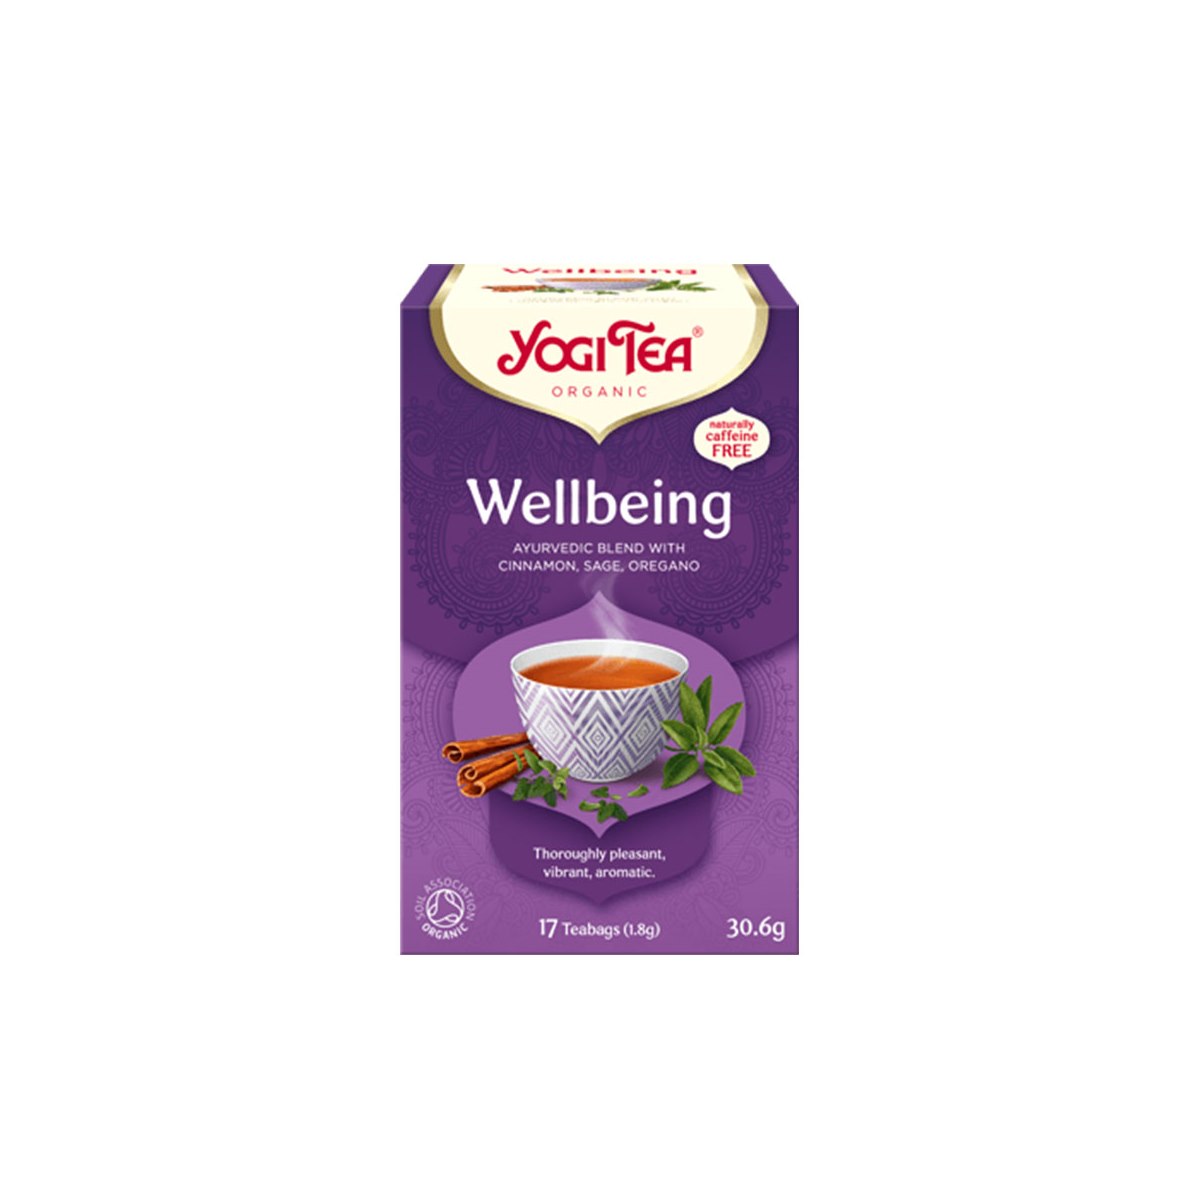 Yogi Tea Wellbeing 17 Bags